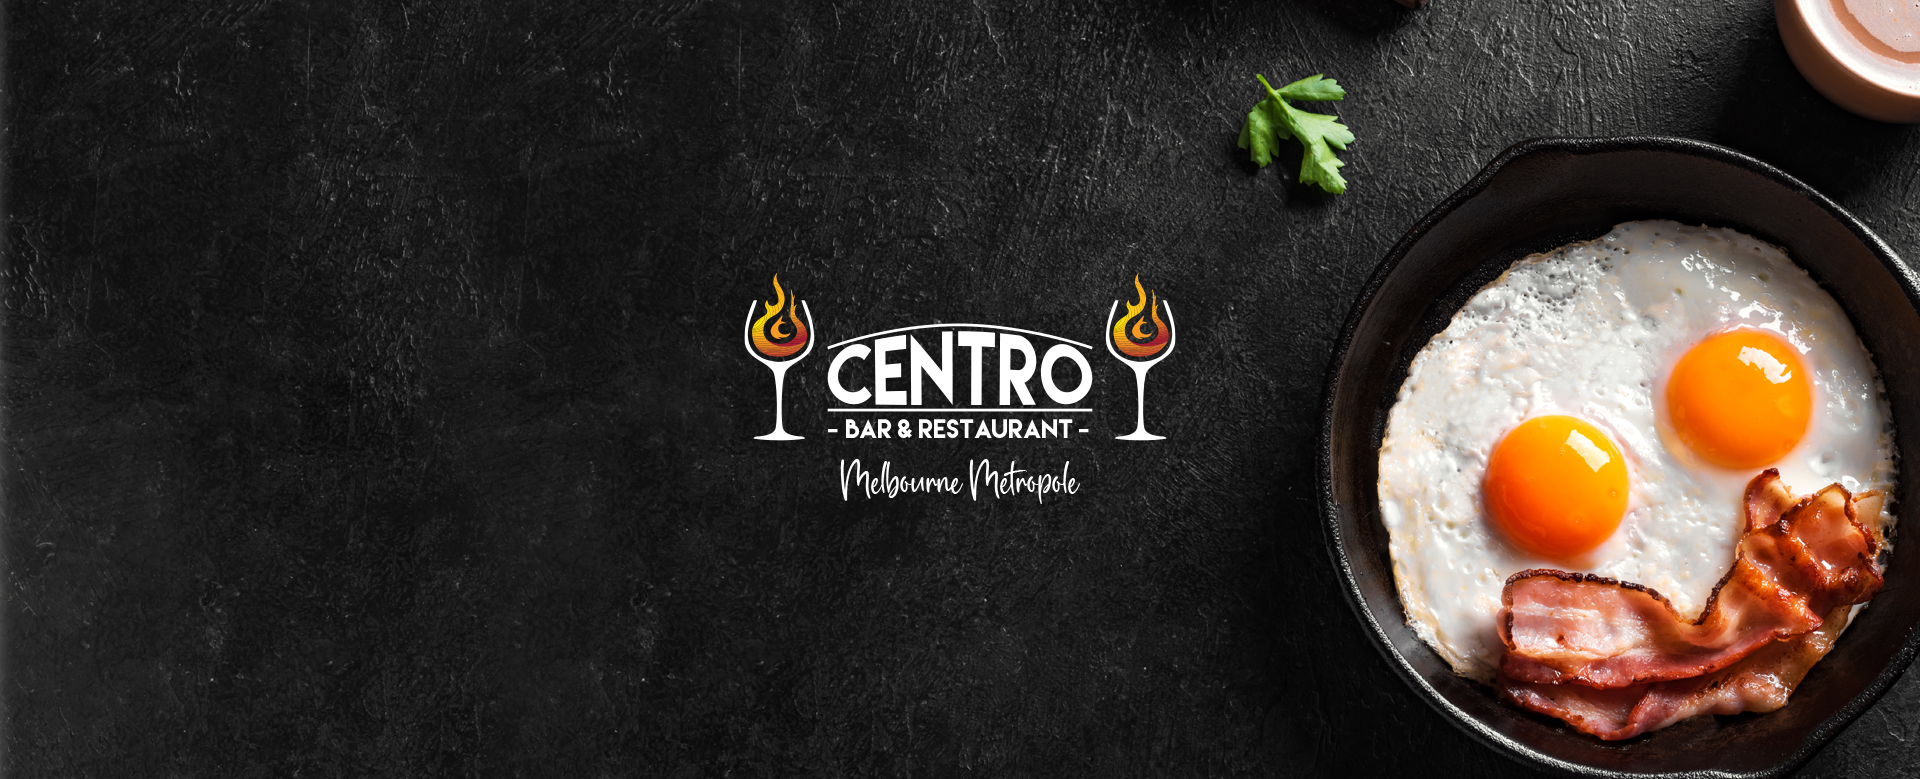 Centro-bar-grill-banner-web